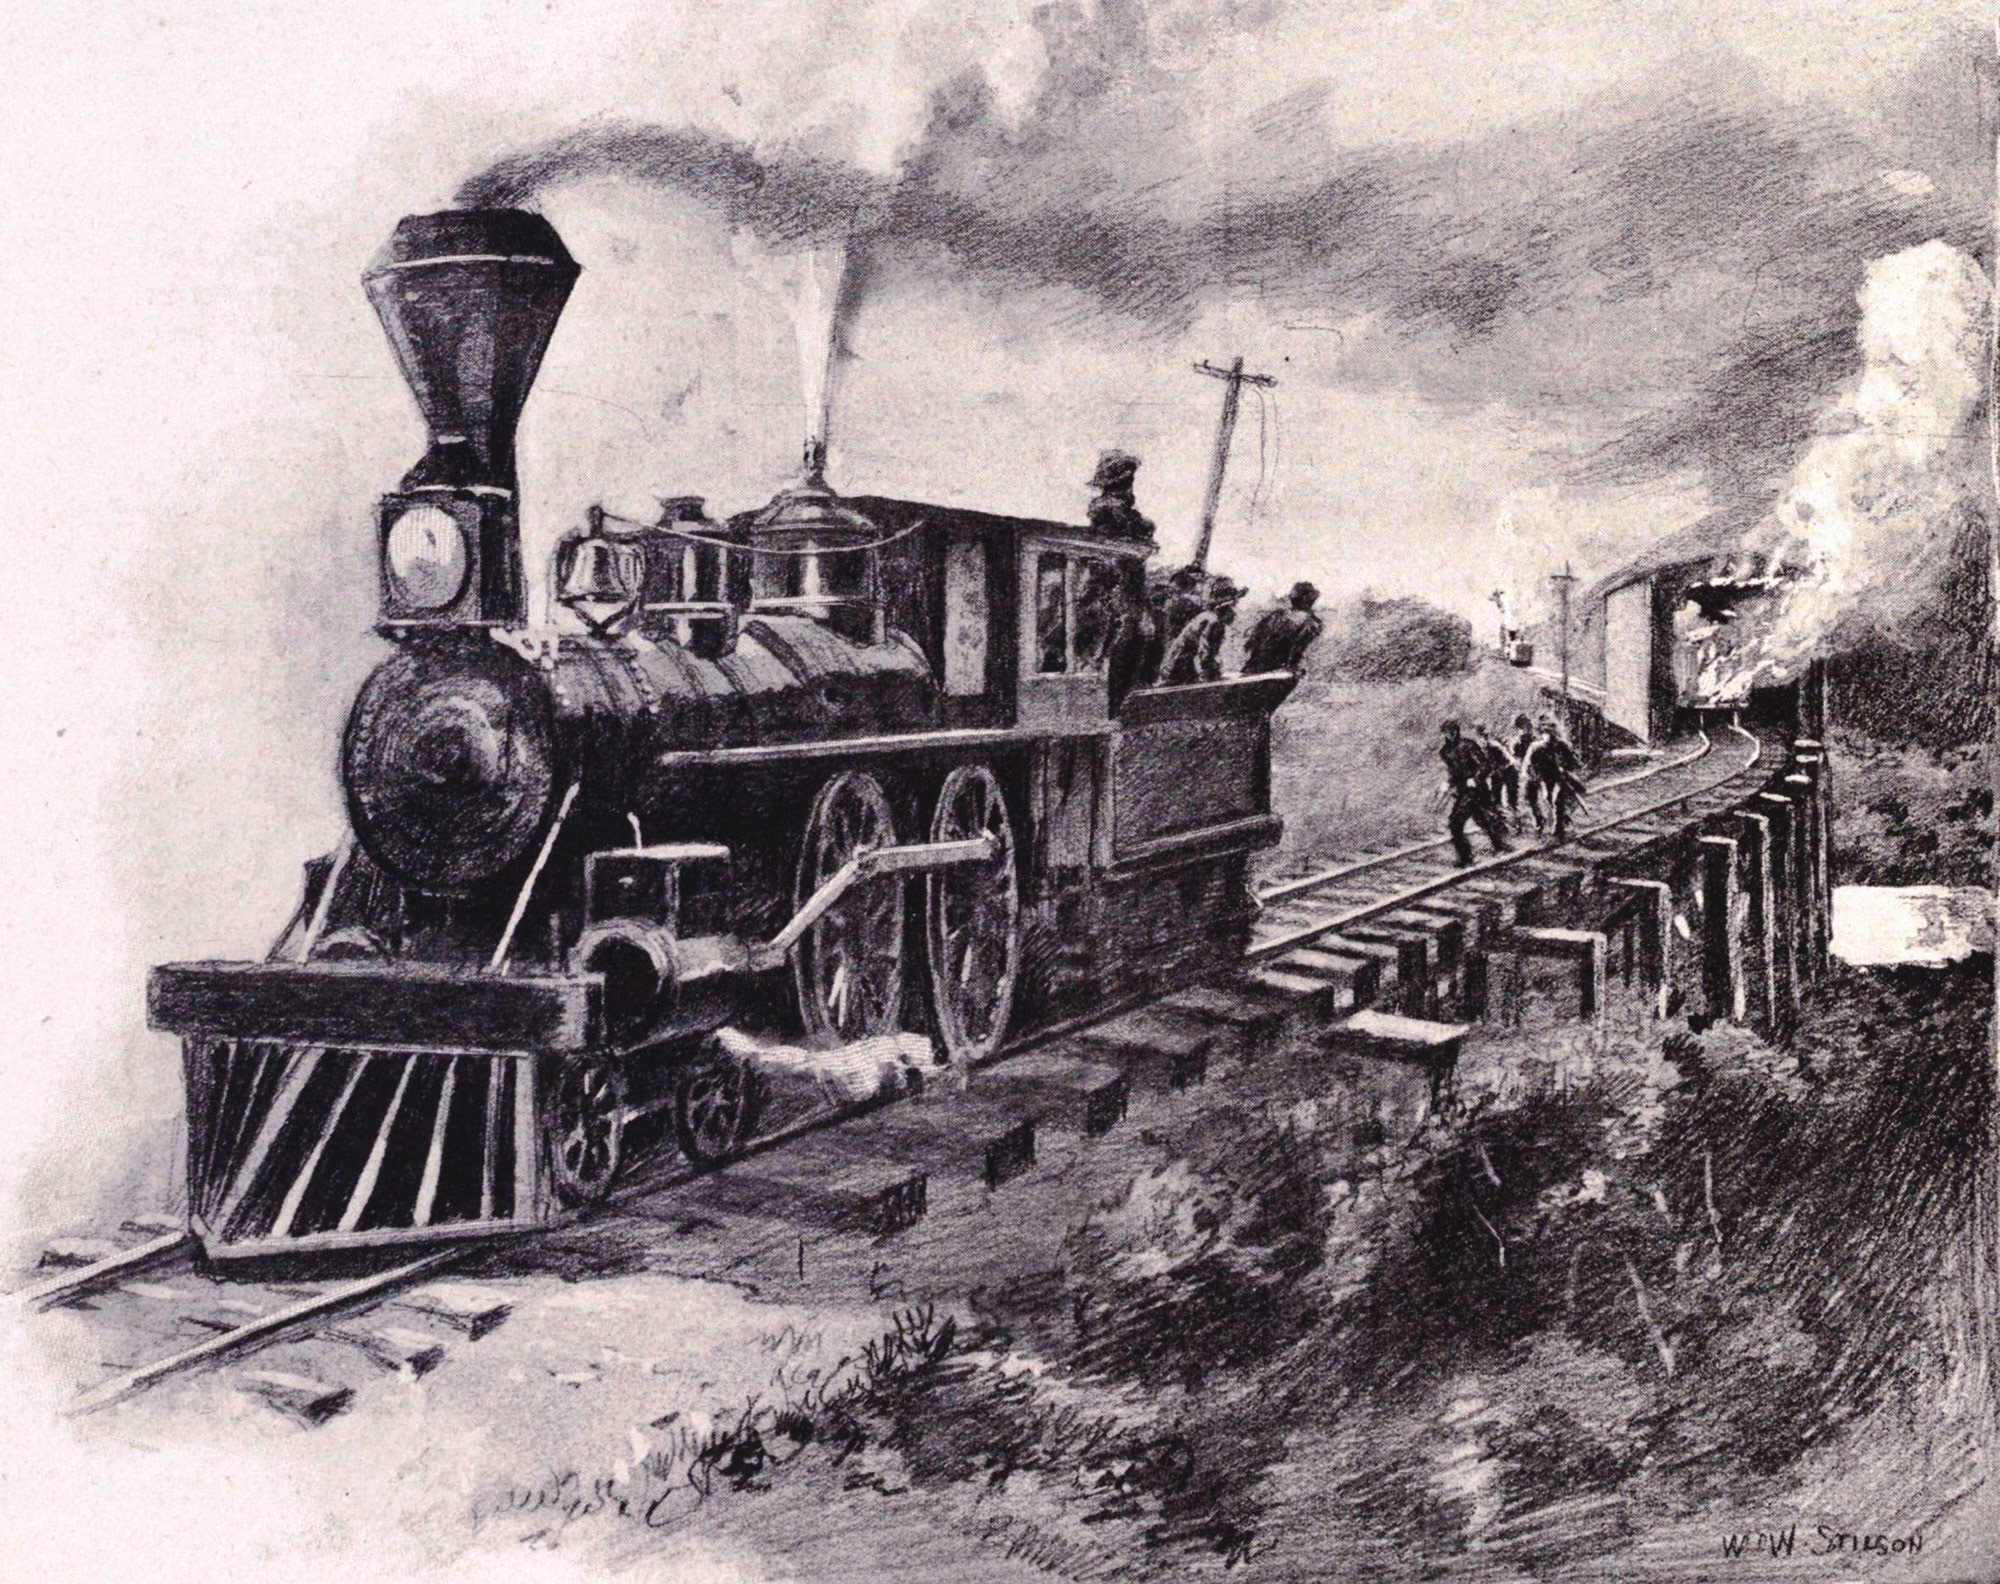 Locomotive #8